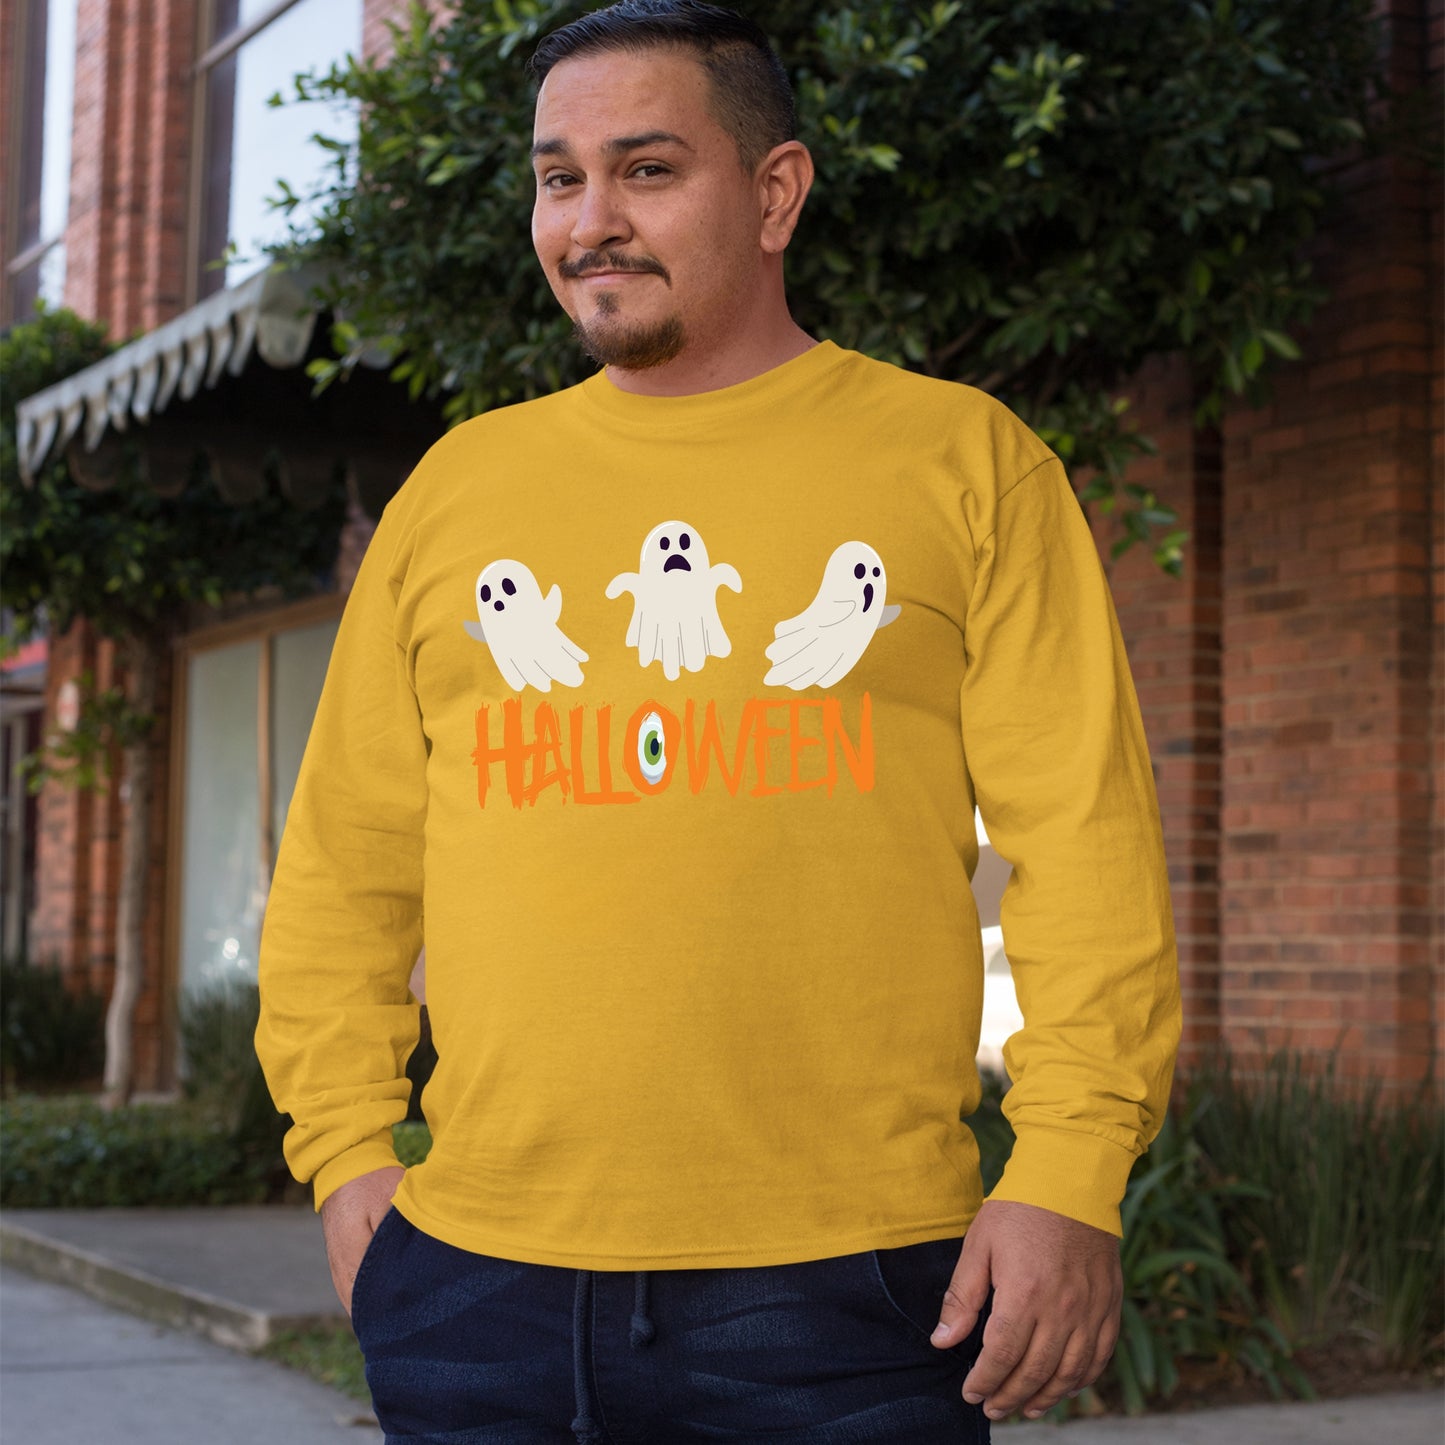 Halloween Ghost Sweatshirt, Halloween Gift Sweatshirt, Halloween Sweater, Cute Halloween Sweatshirt, Funny Halloween Sweatshirt